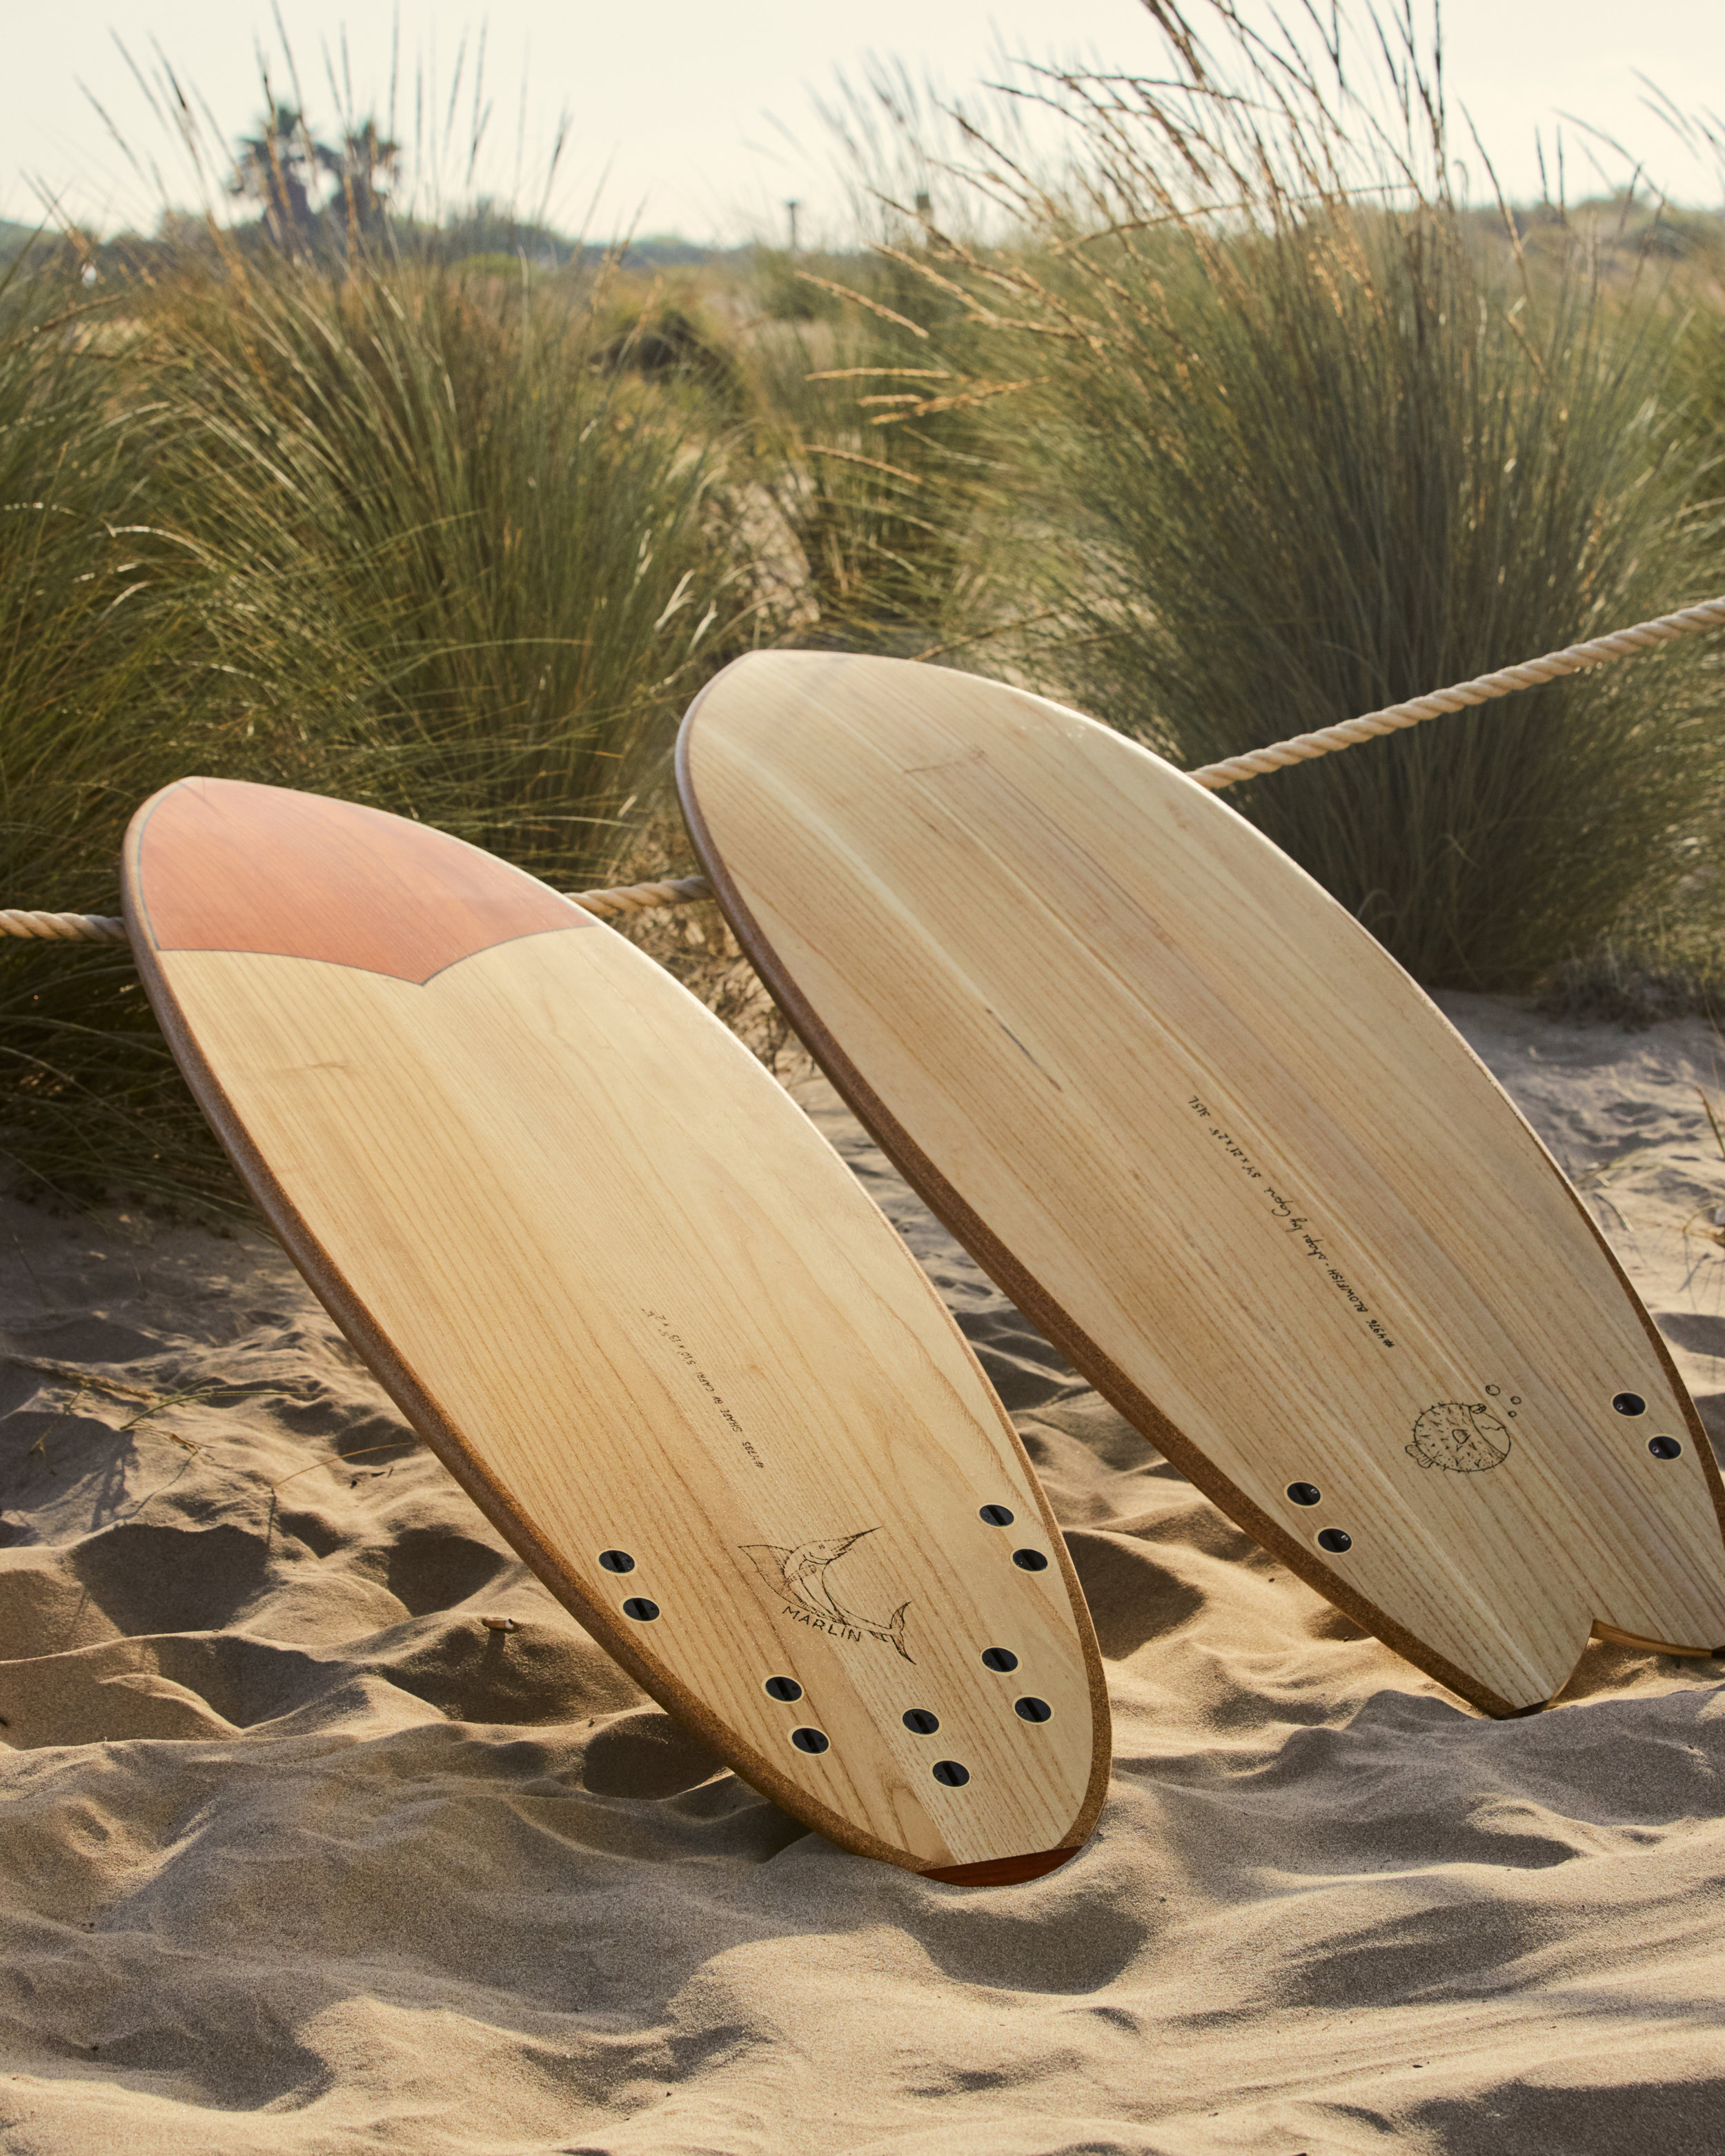 wooden sustainable eco surfboard Truwood